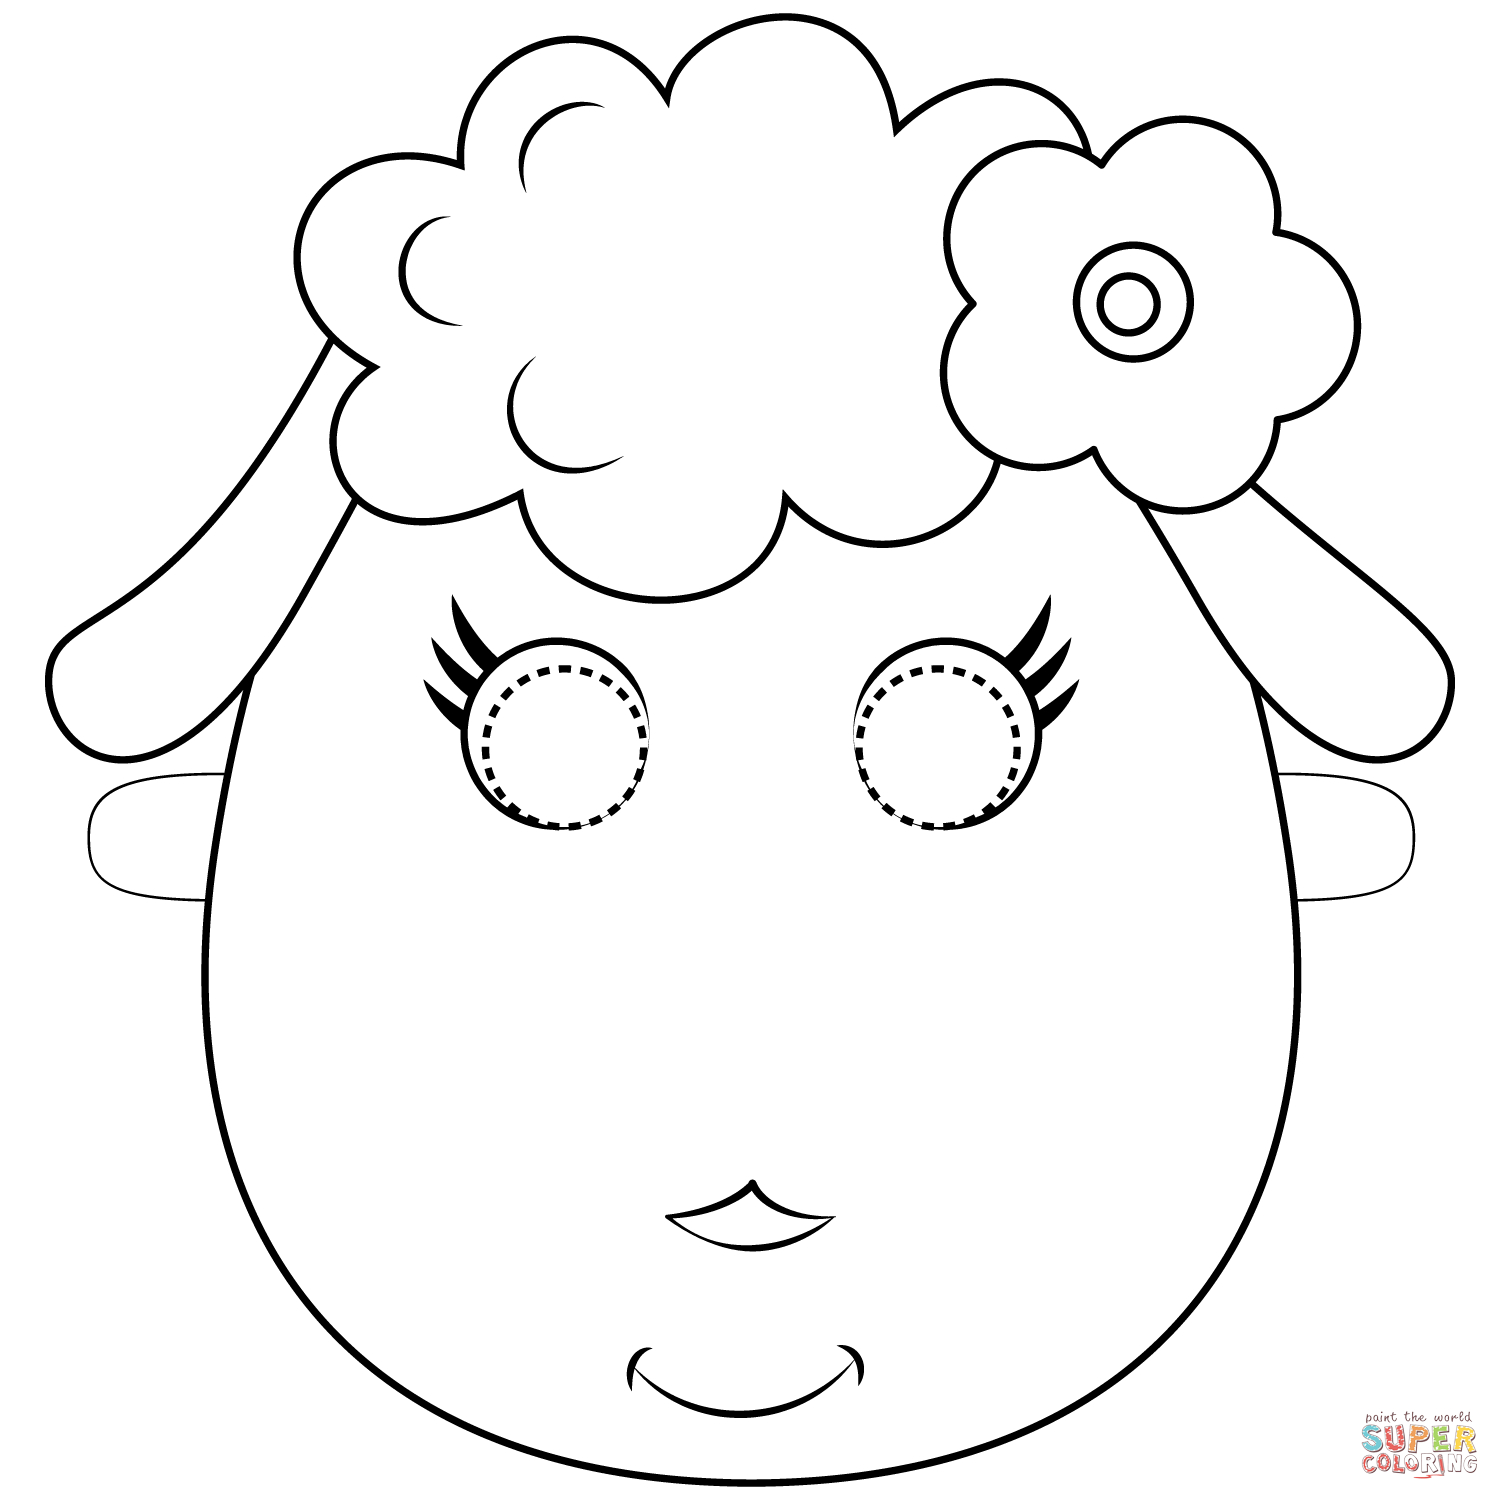 Sheep Mask Coloring Page | Free Printable Coloring Pages - Free Printable Sheep Mask